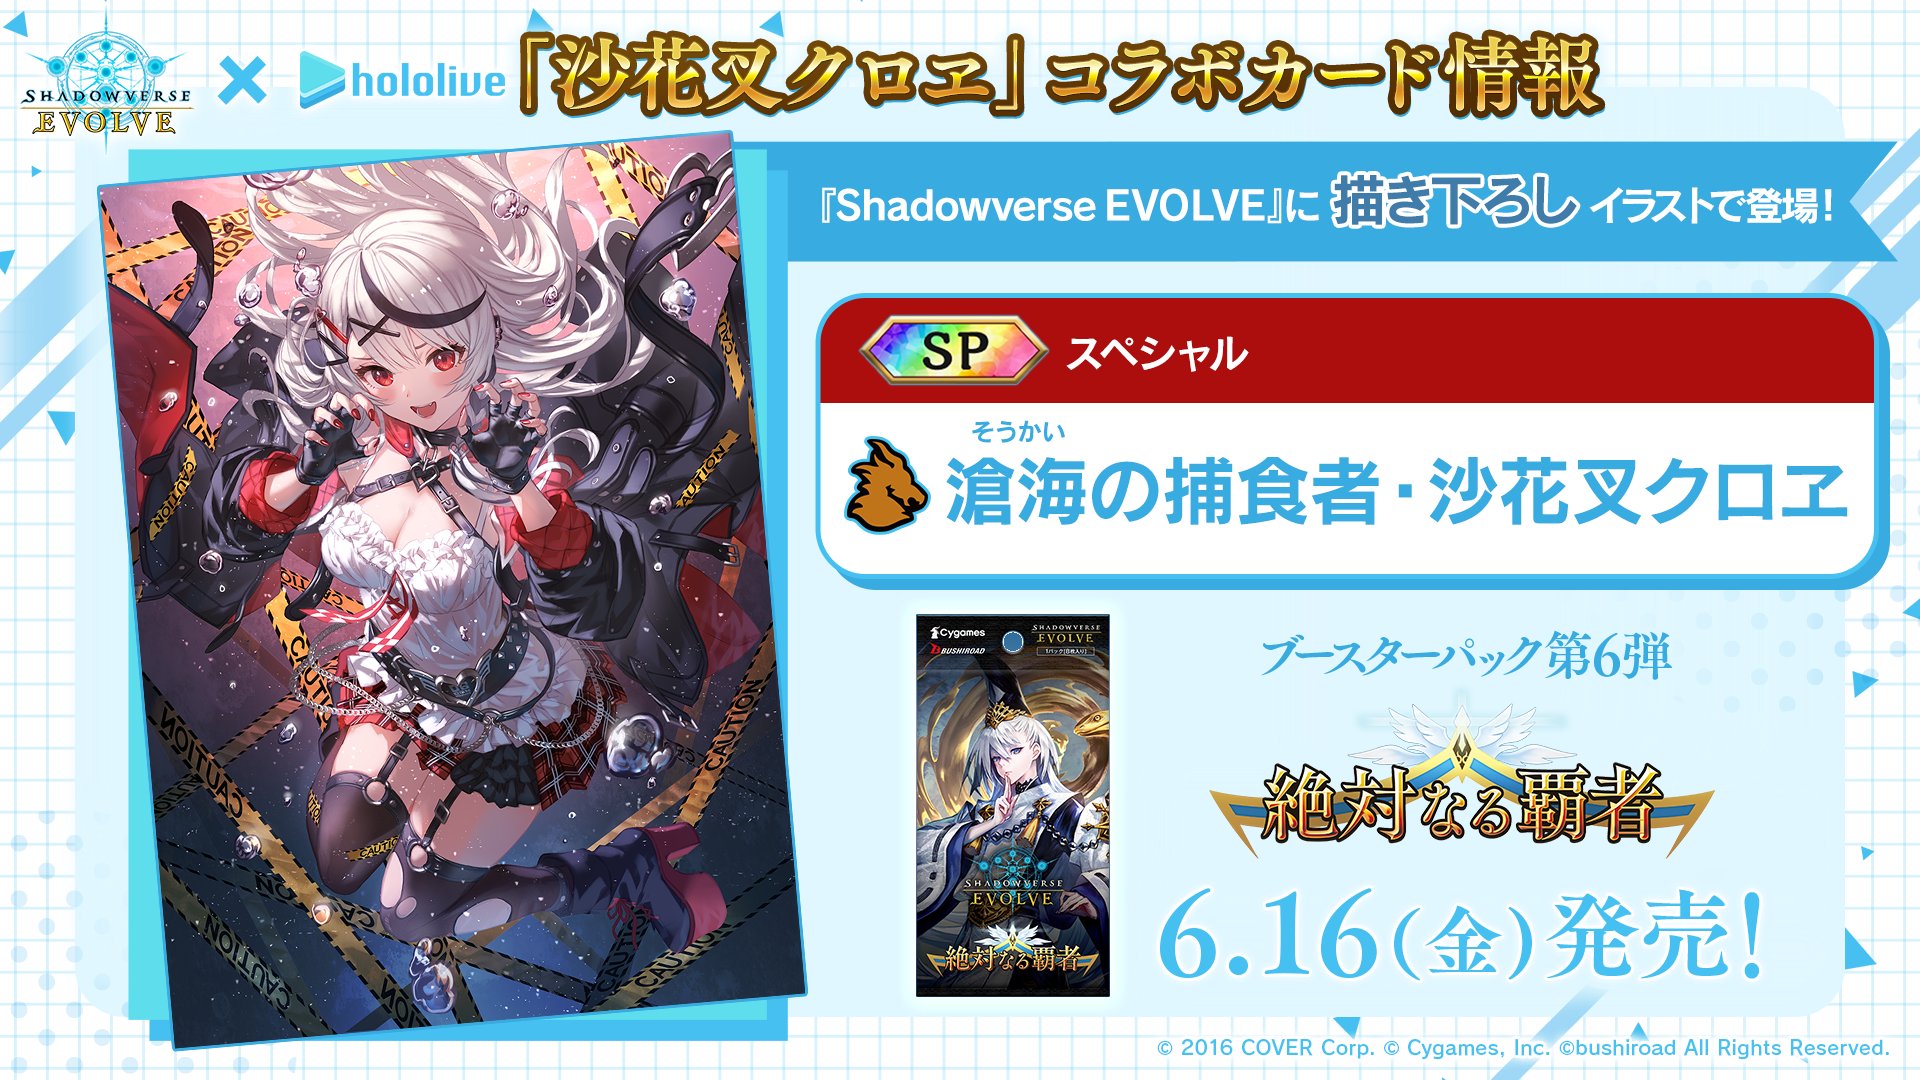 Shadowverse EVOLVE公式アカウント on X: 